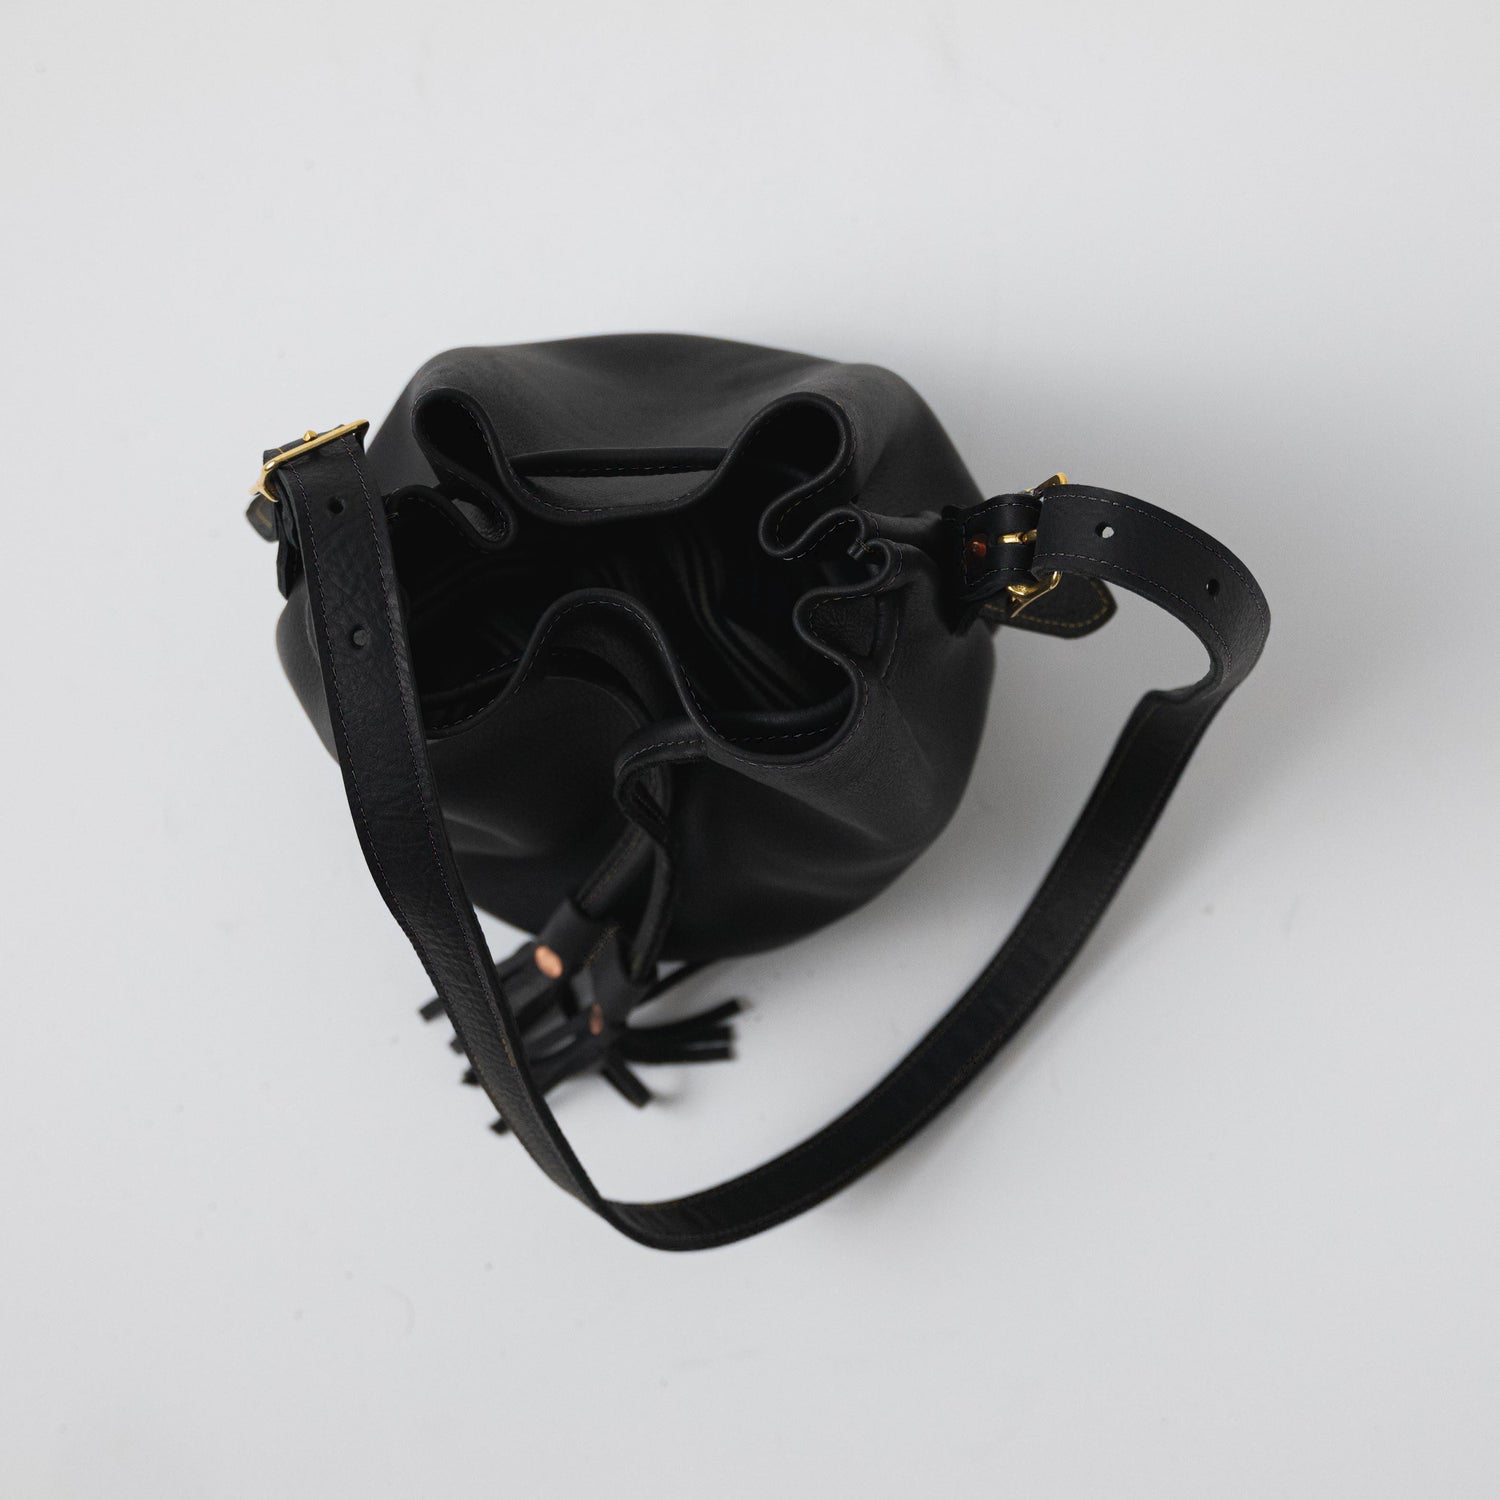 Designer Bucket Bags, Leather Bucket Bags